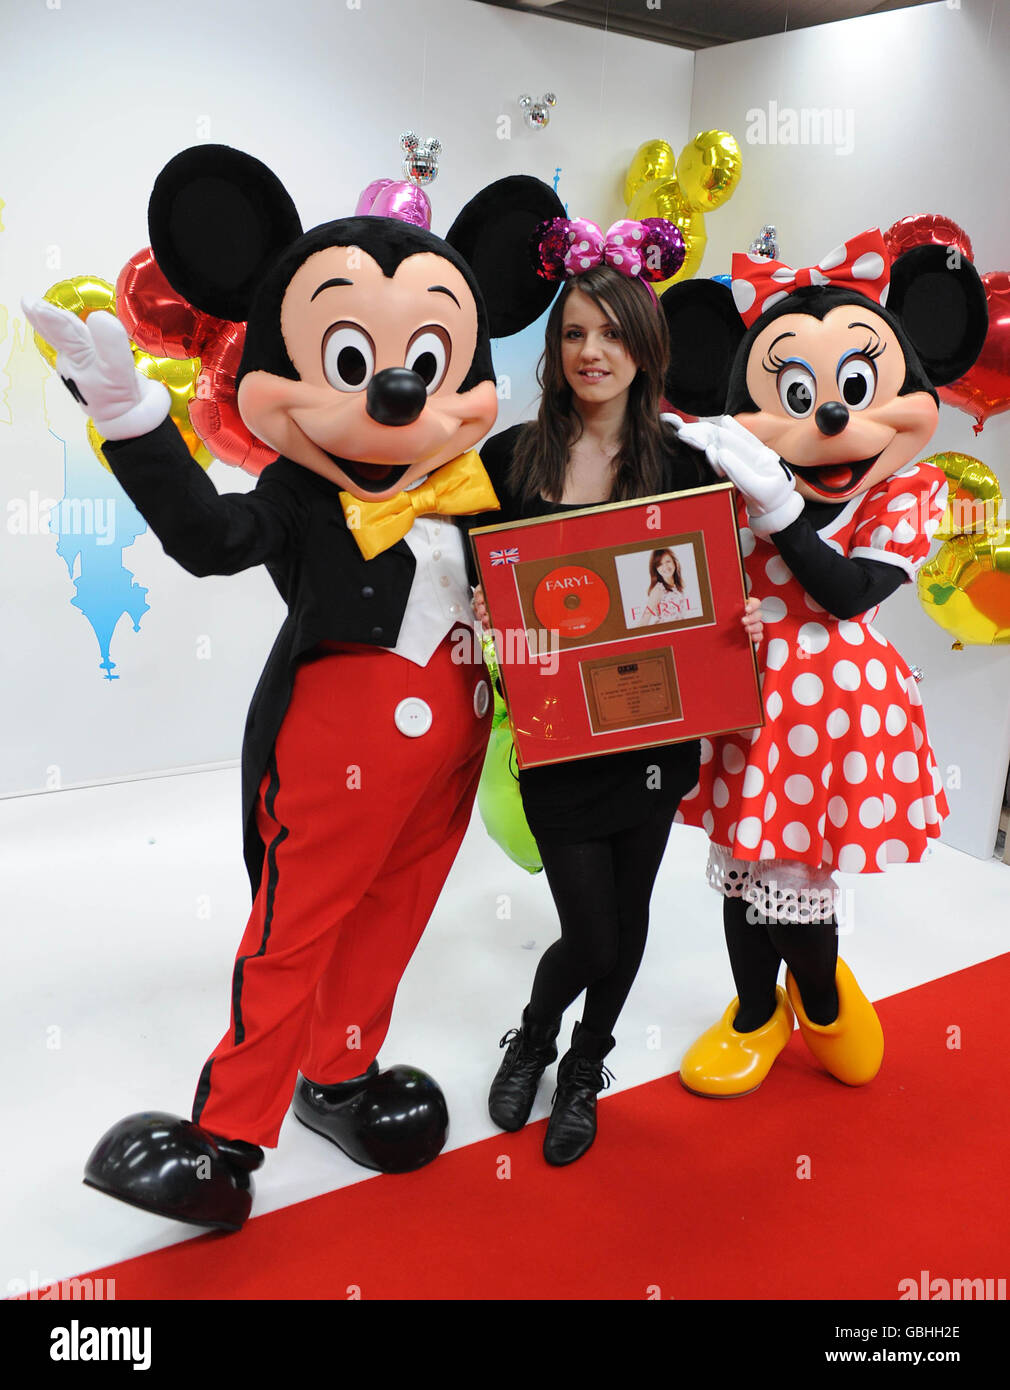 Disney Photo Album - 200 Pic - Mickey and Minnie in Paris